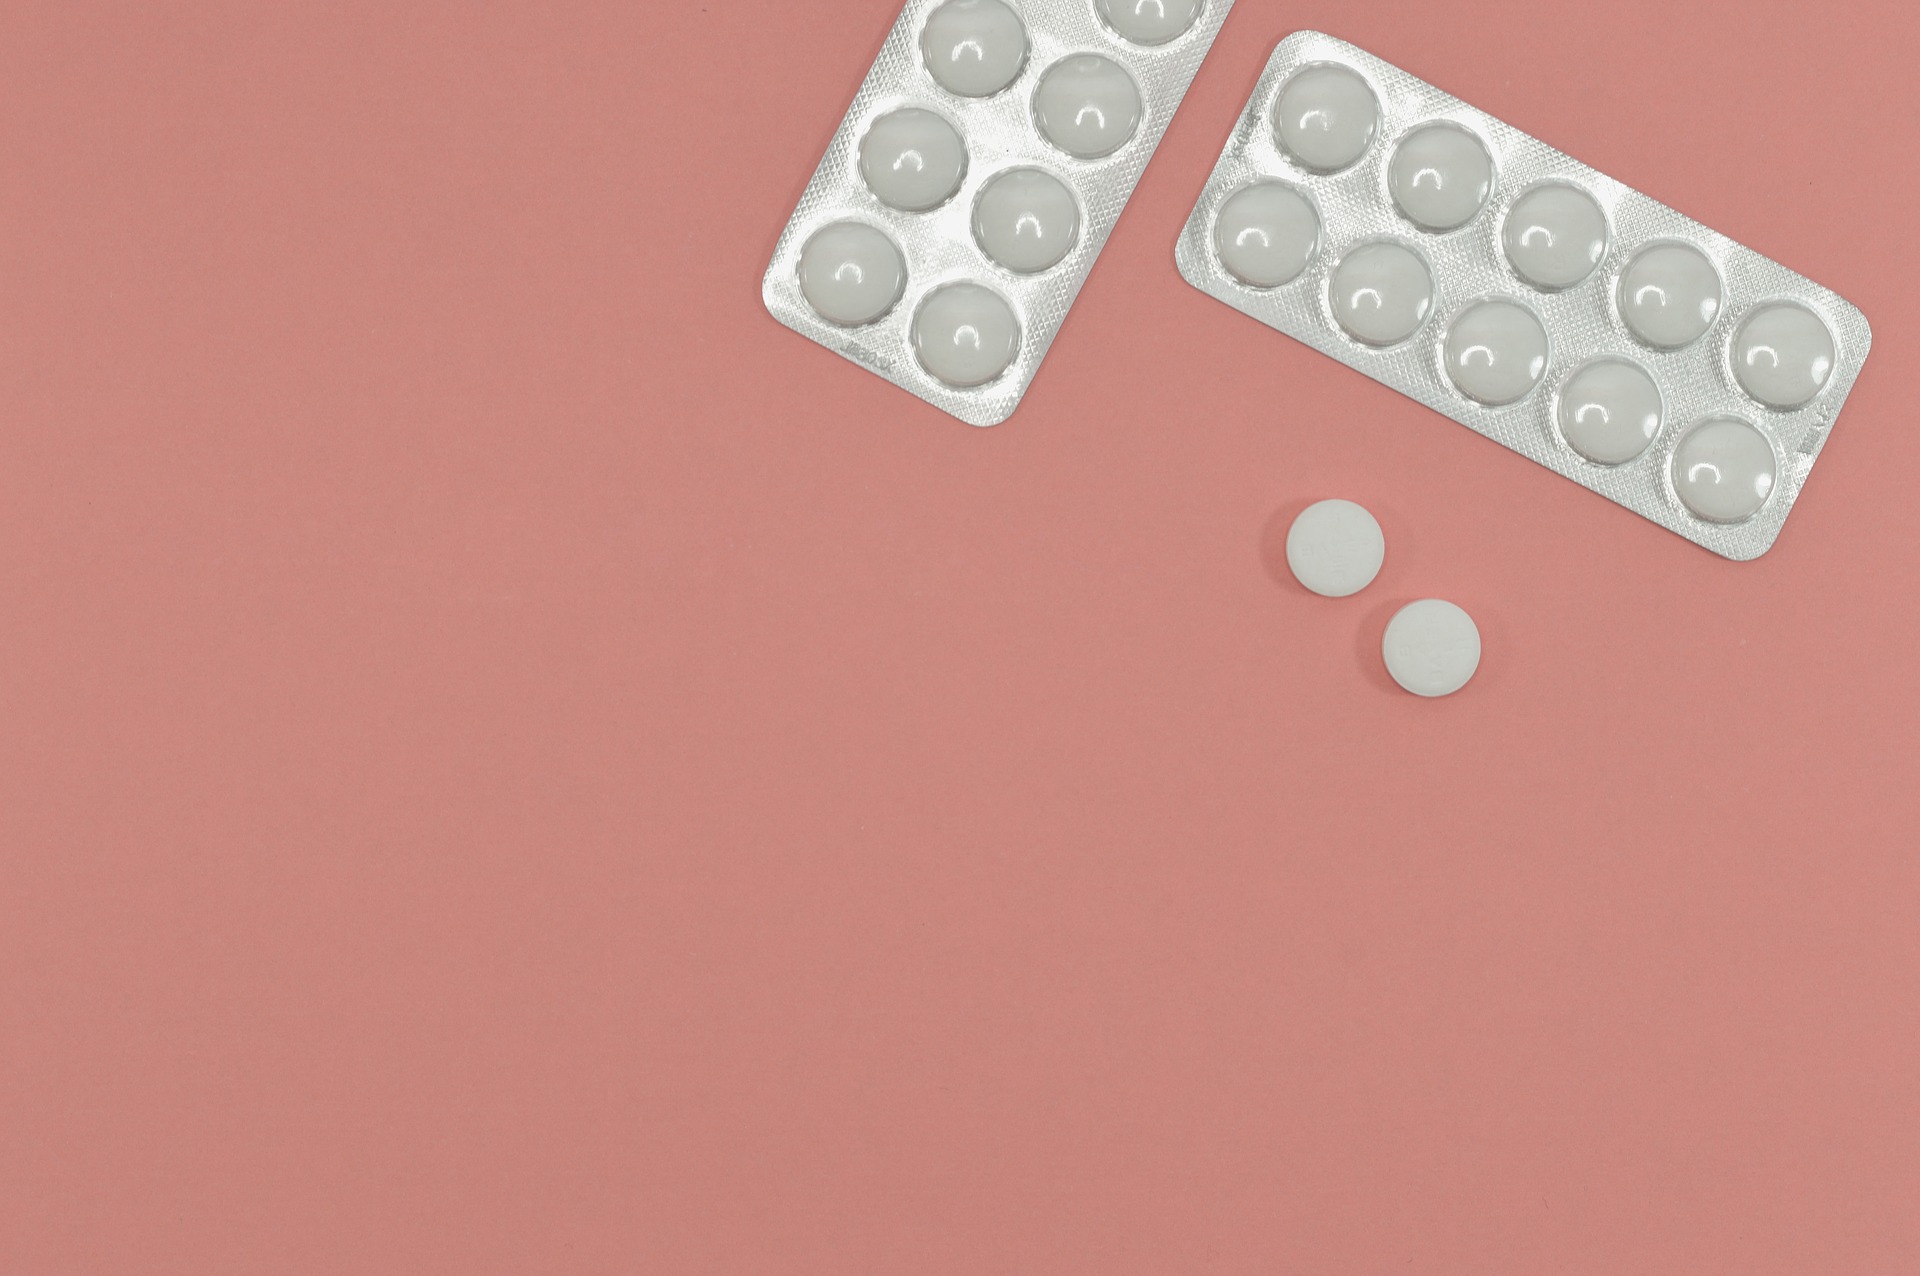 farmaci con sfondo rosa.jpg